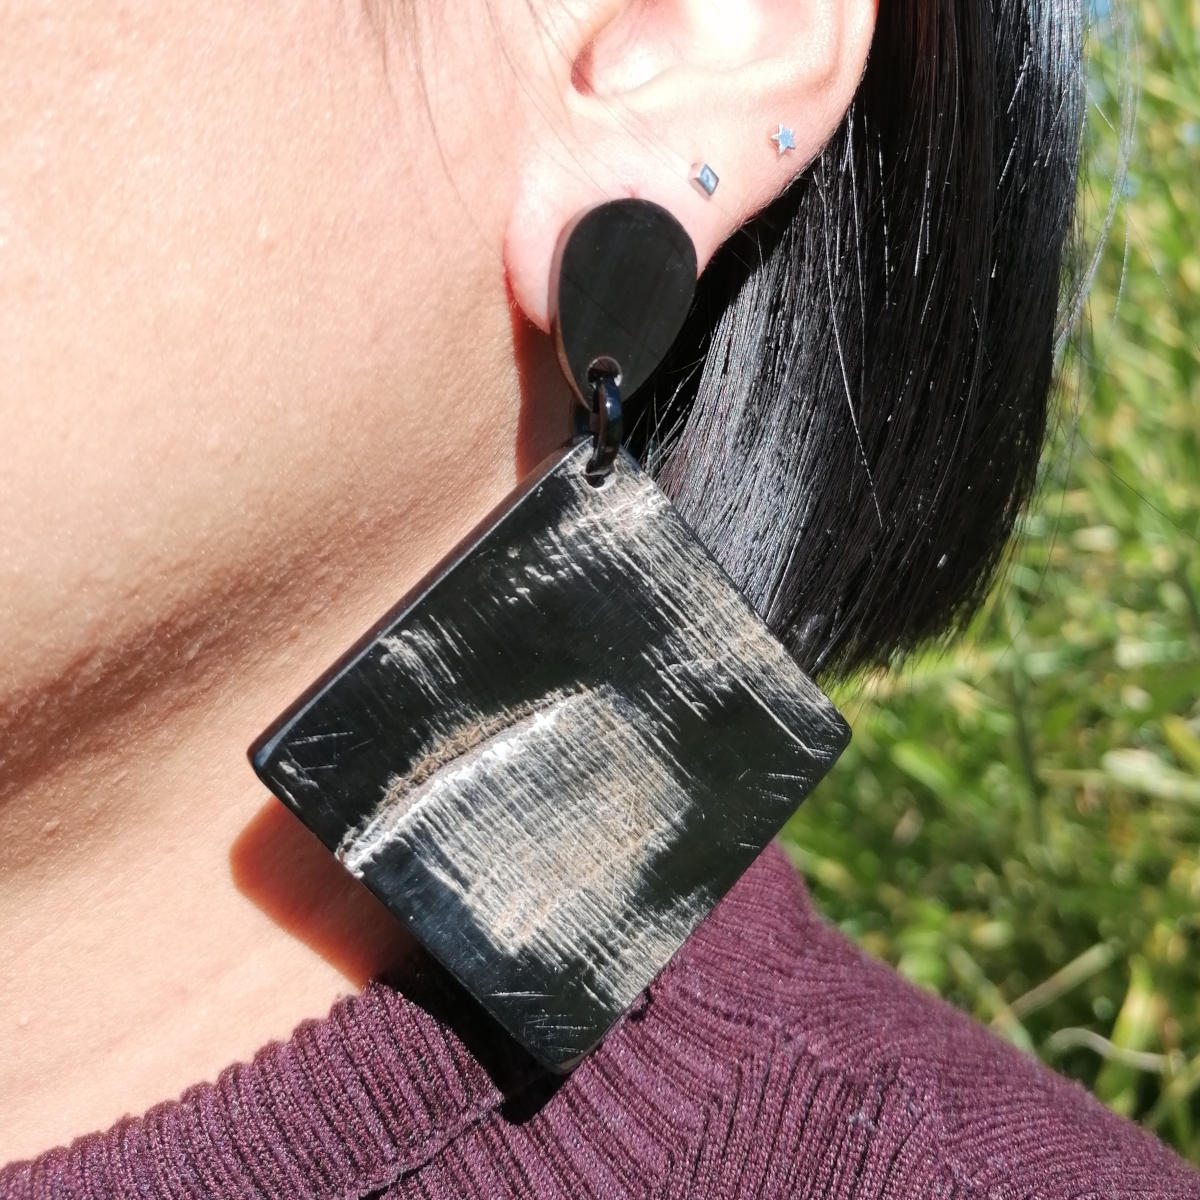 Naturally texturized, black buffalo horn earrings - hand made, fair trade